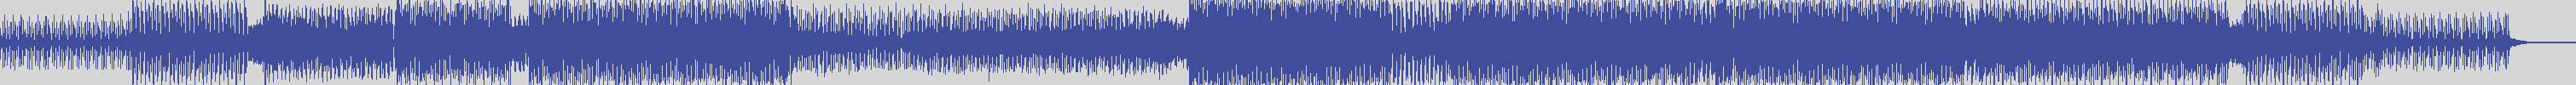 suxess [SX005] Dyson Kellerman - Get You [Extended Mix] audio wave form